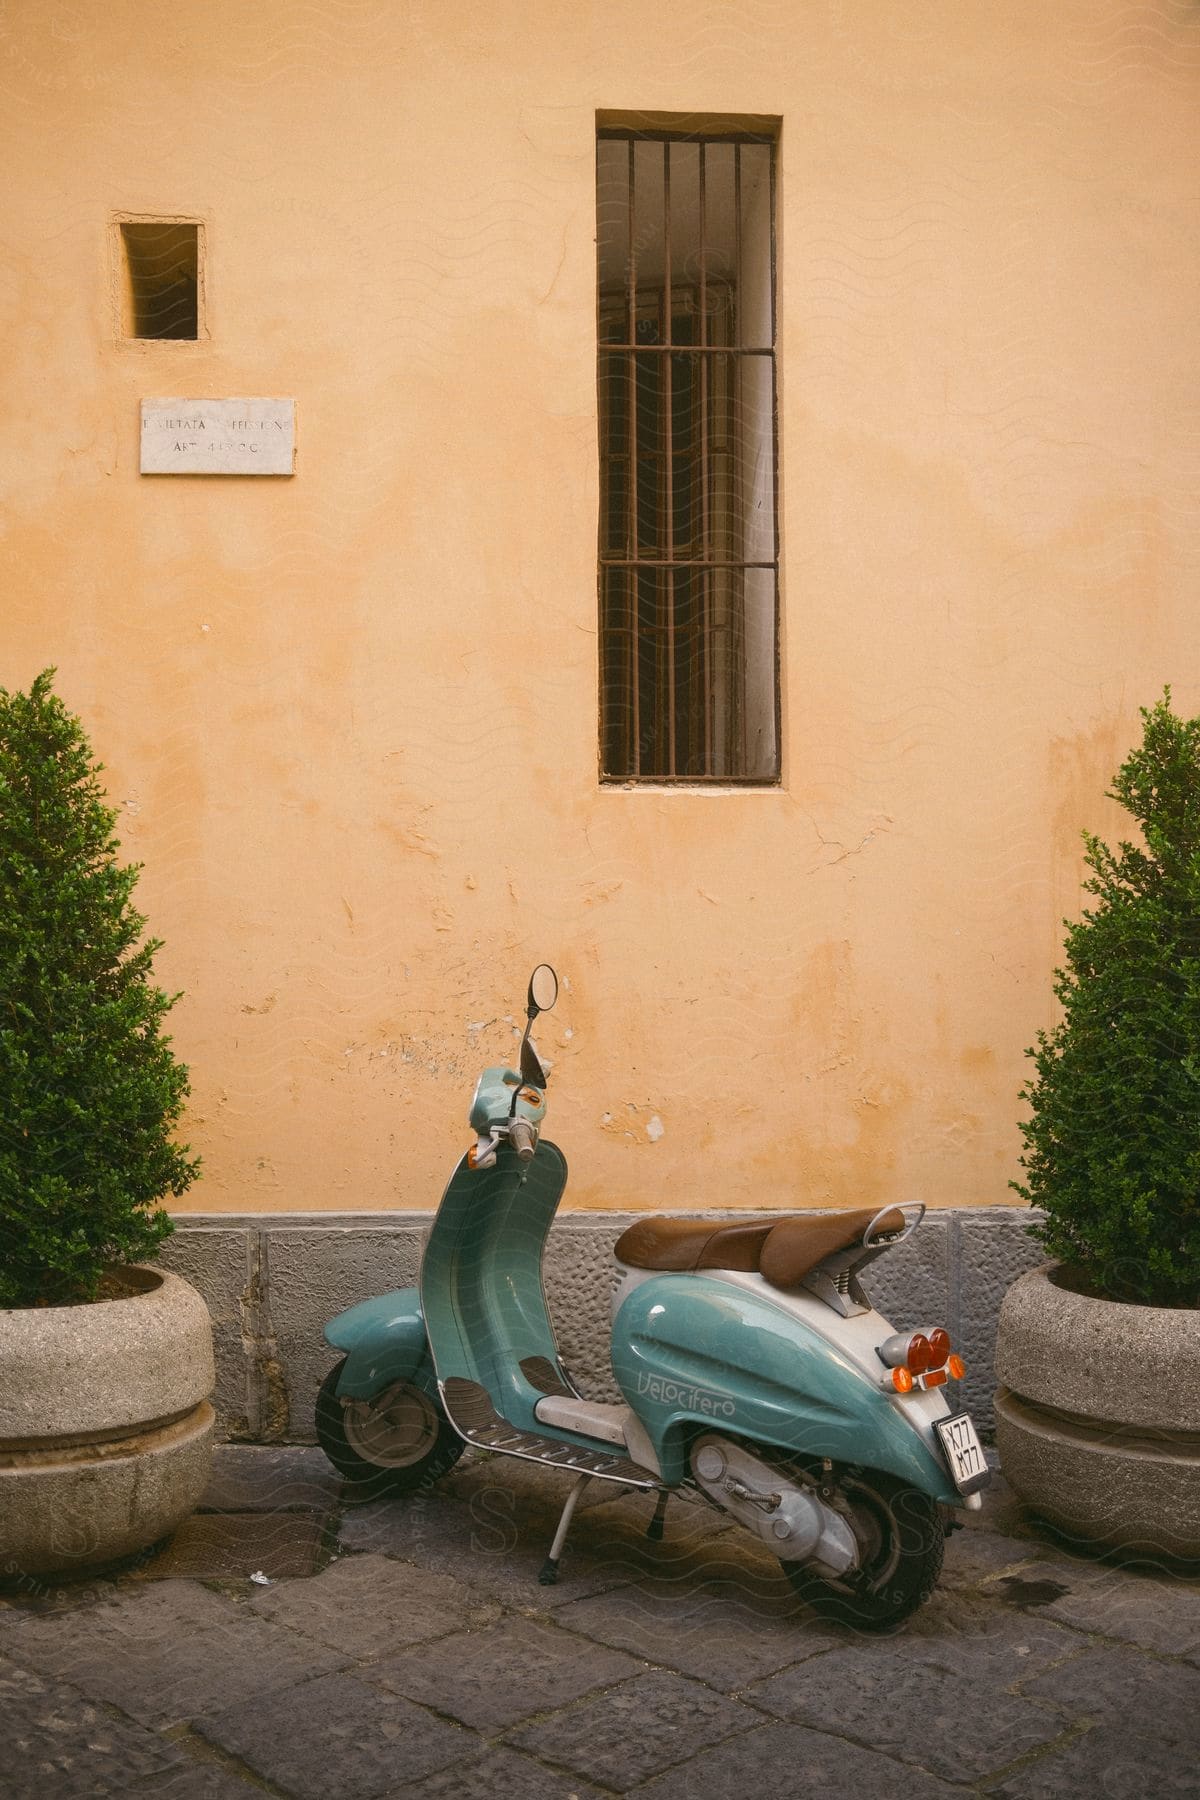 A light blue motor scooter is parked outside a light orange concrete building.